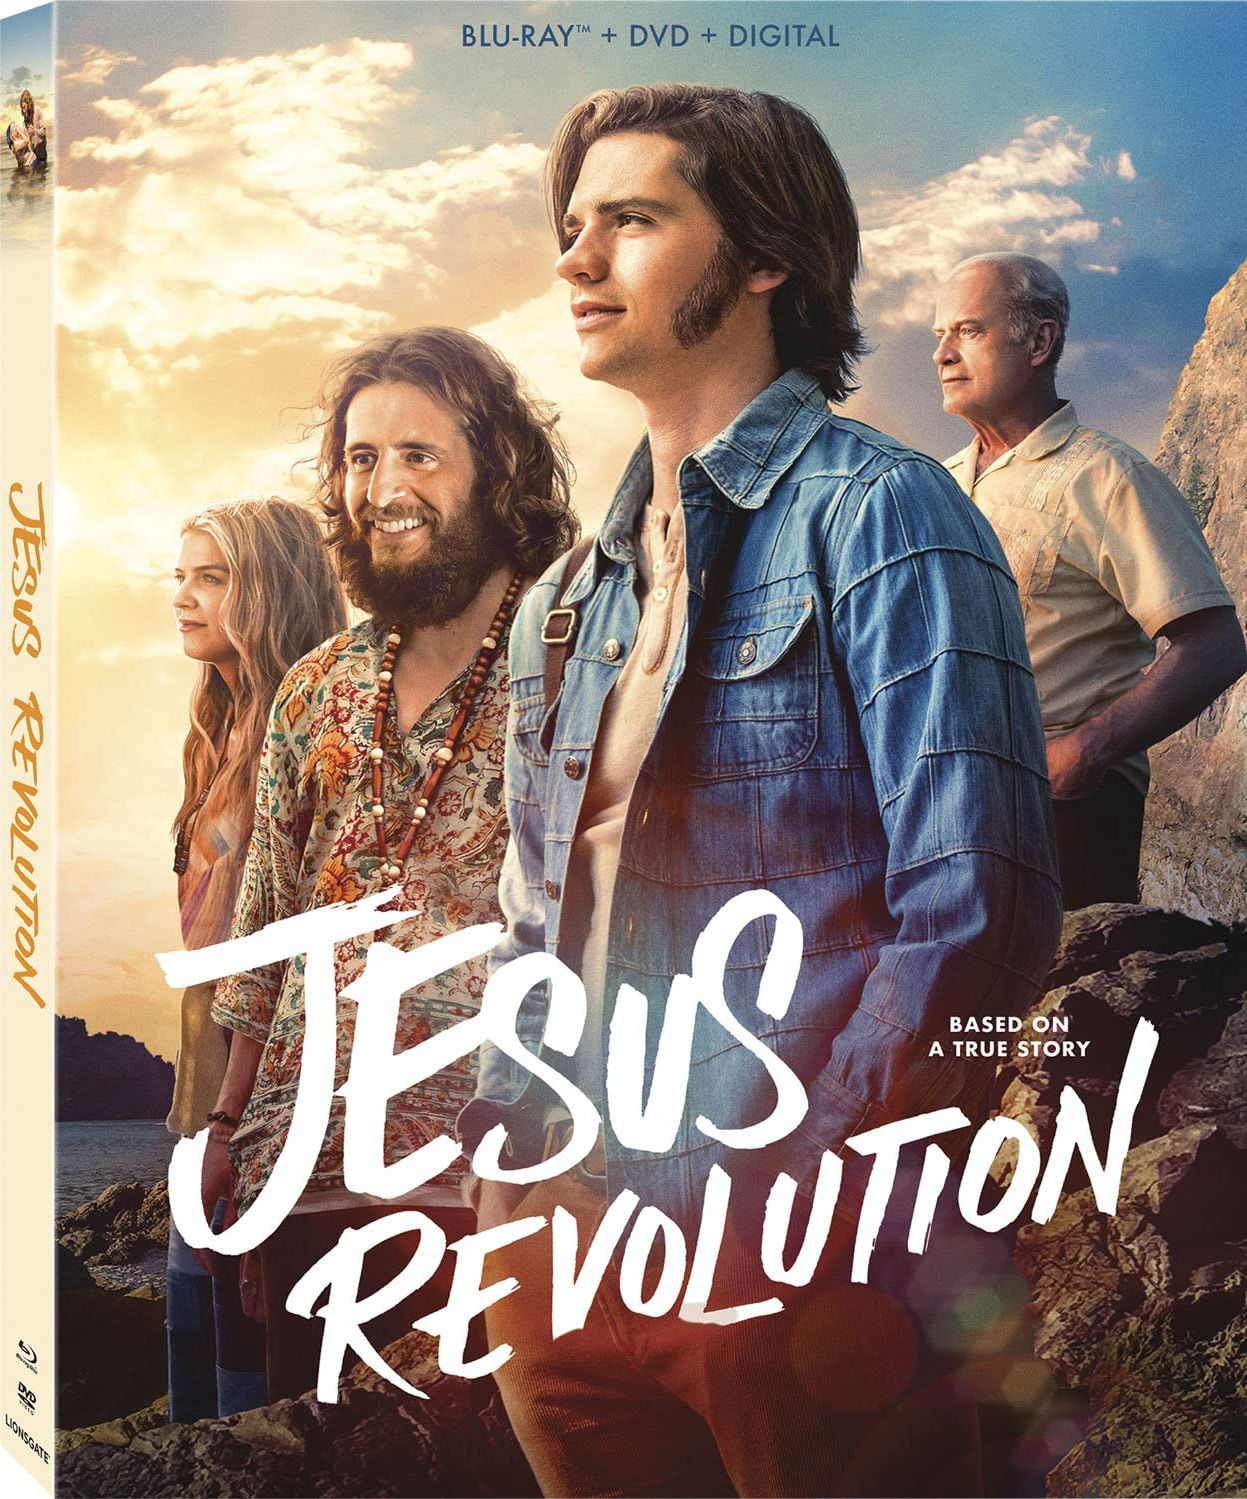 christian movie review jesus revolution